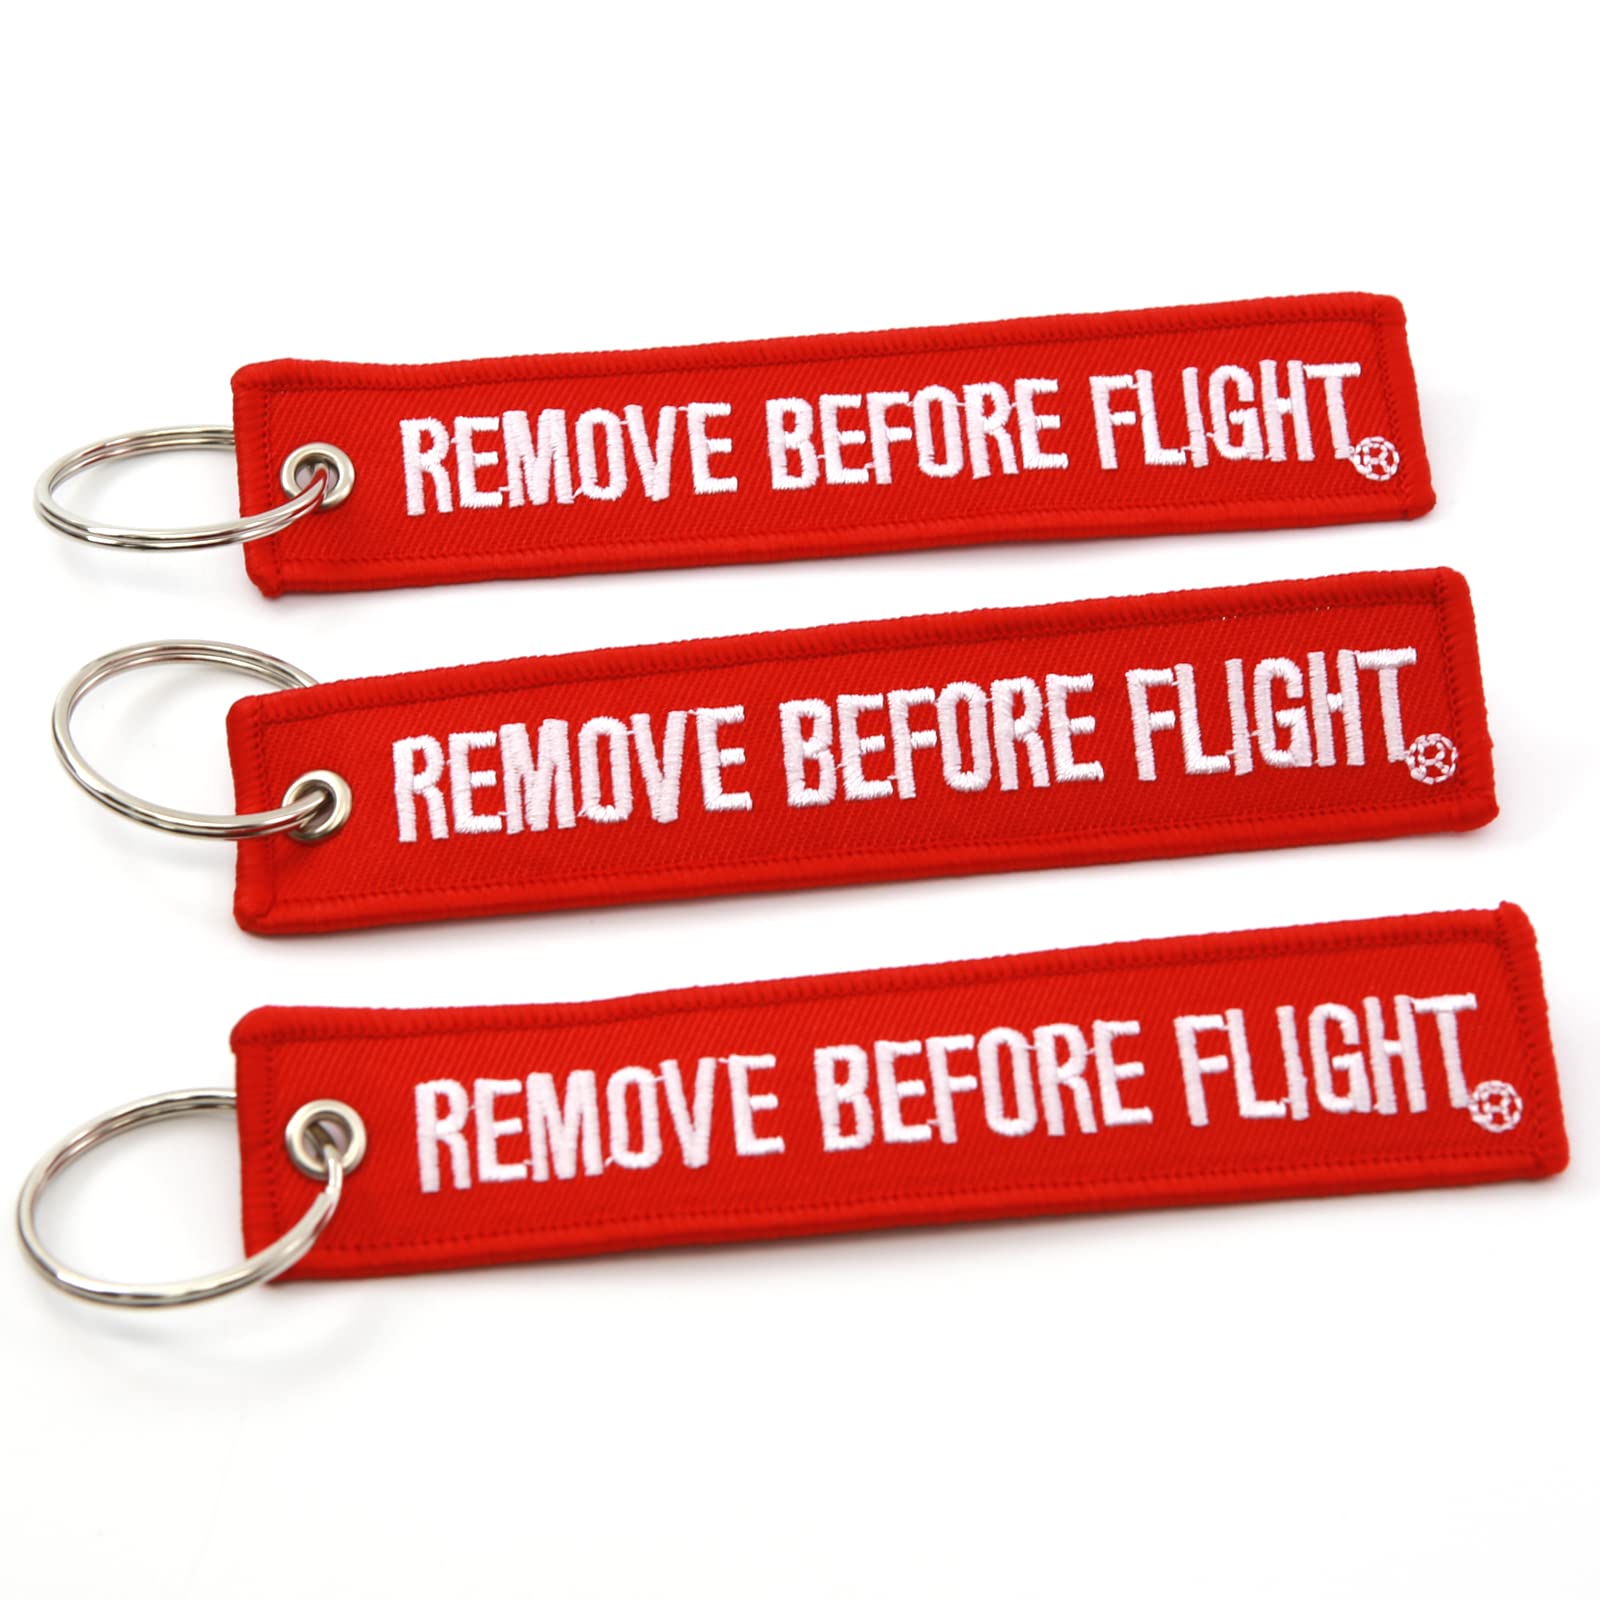 Rotary13B1 - Remove Before Flight Key Chain - by von Rotary13B1